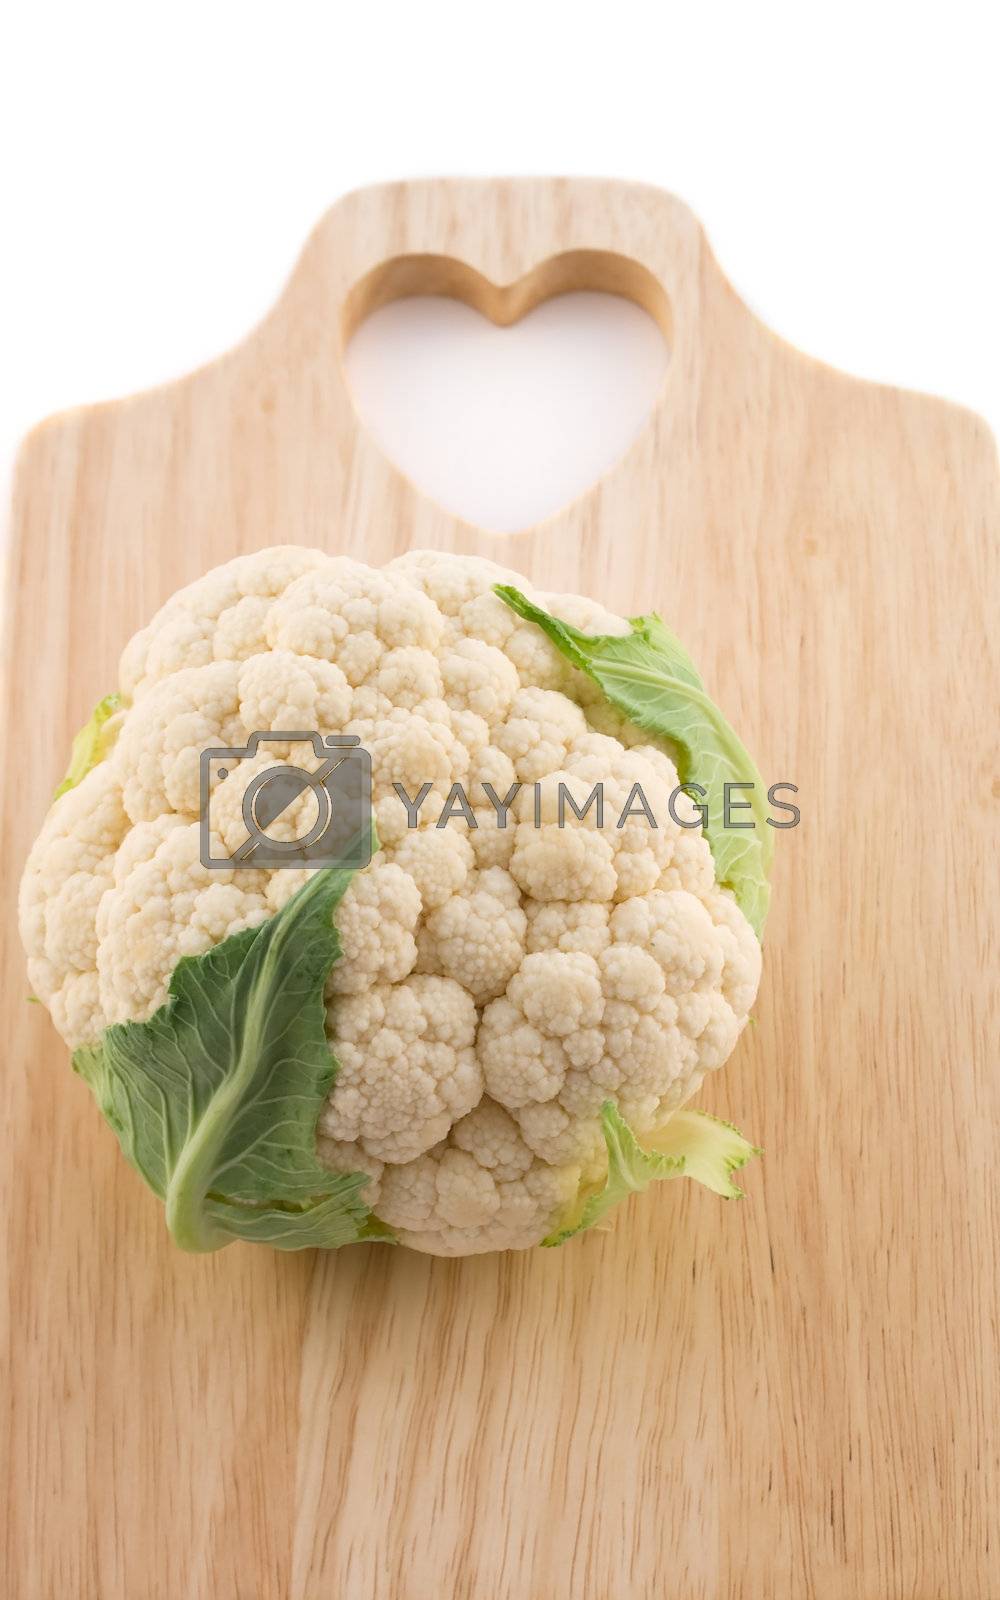 Royalty free image of Cauliflower  on cutting board by mangost